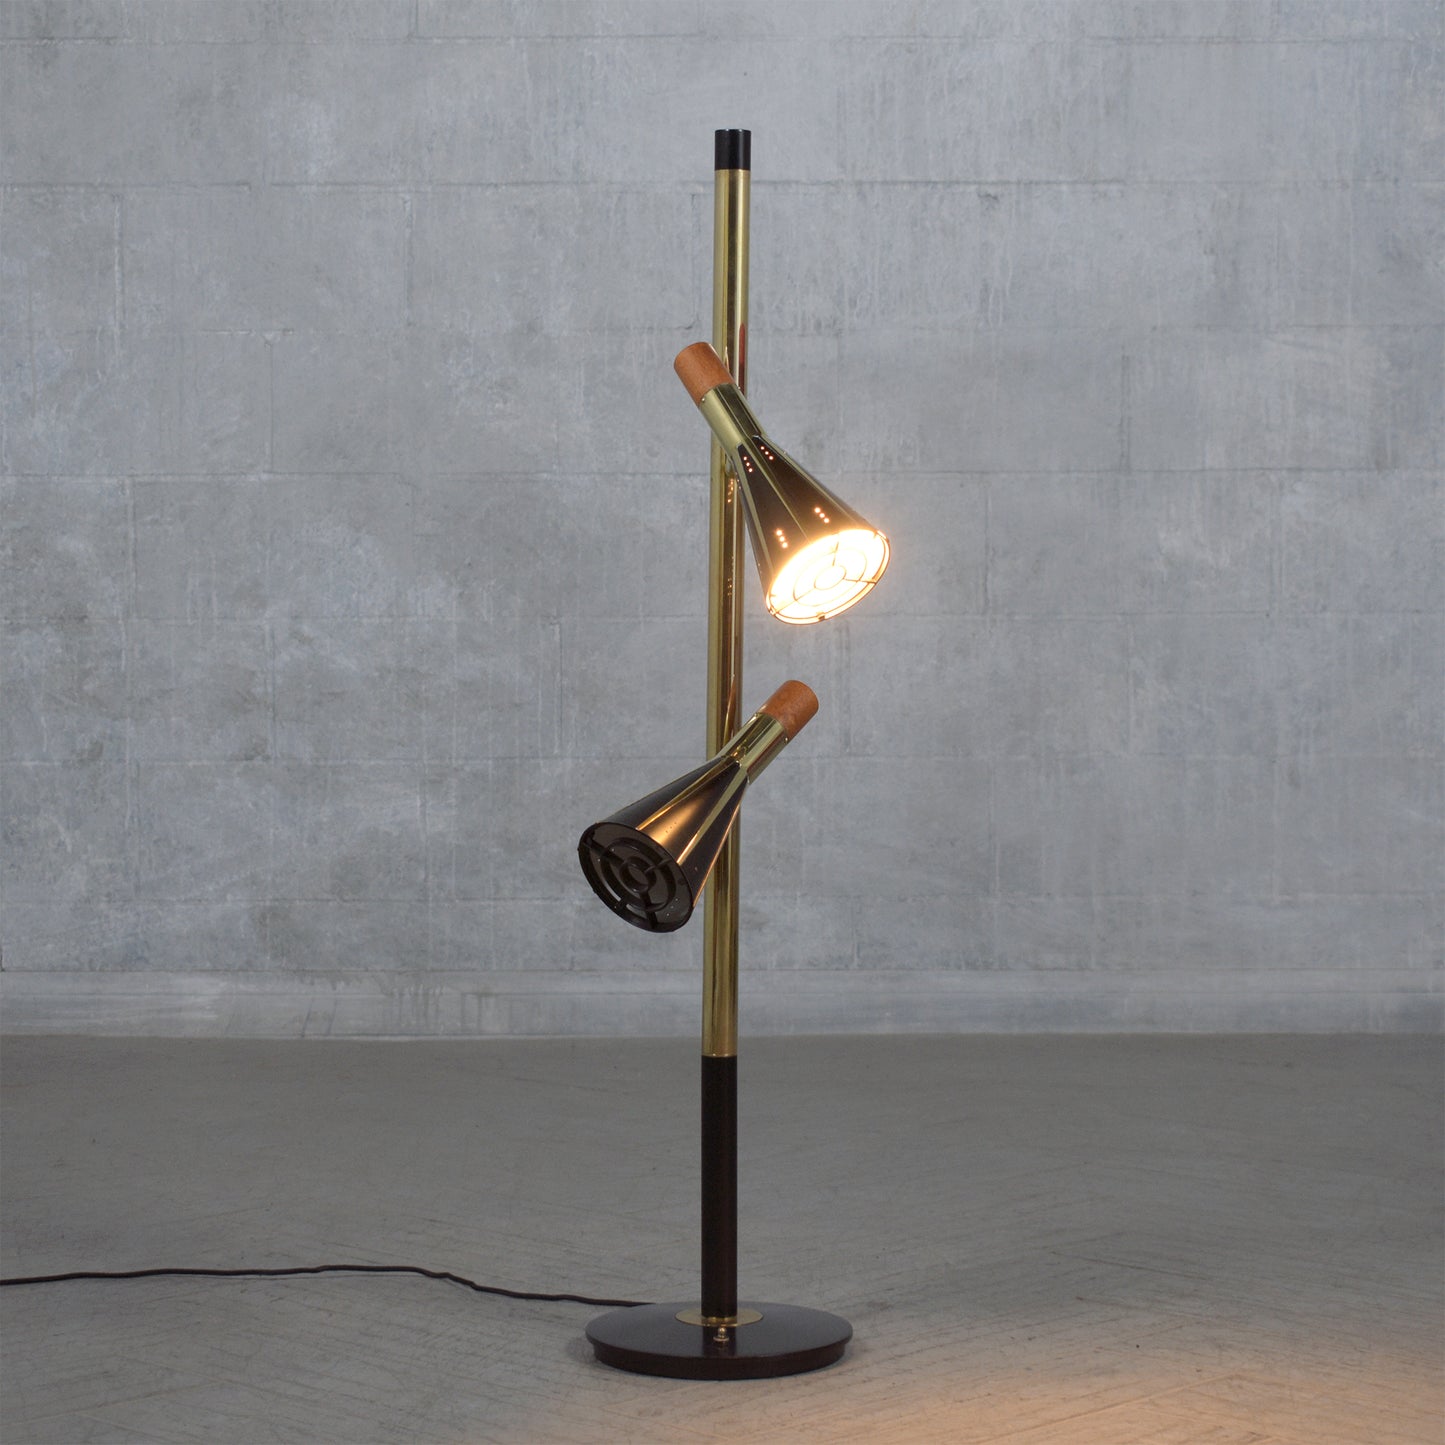 Restored 1960s Mid-Century Modern Floor Lamp: Brass & Wood Elegance